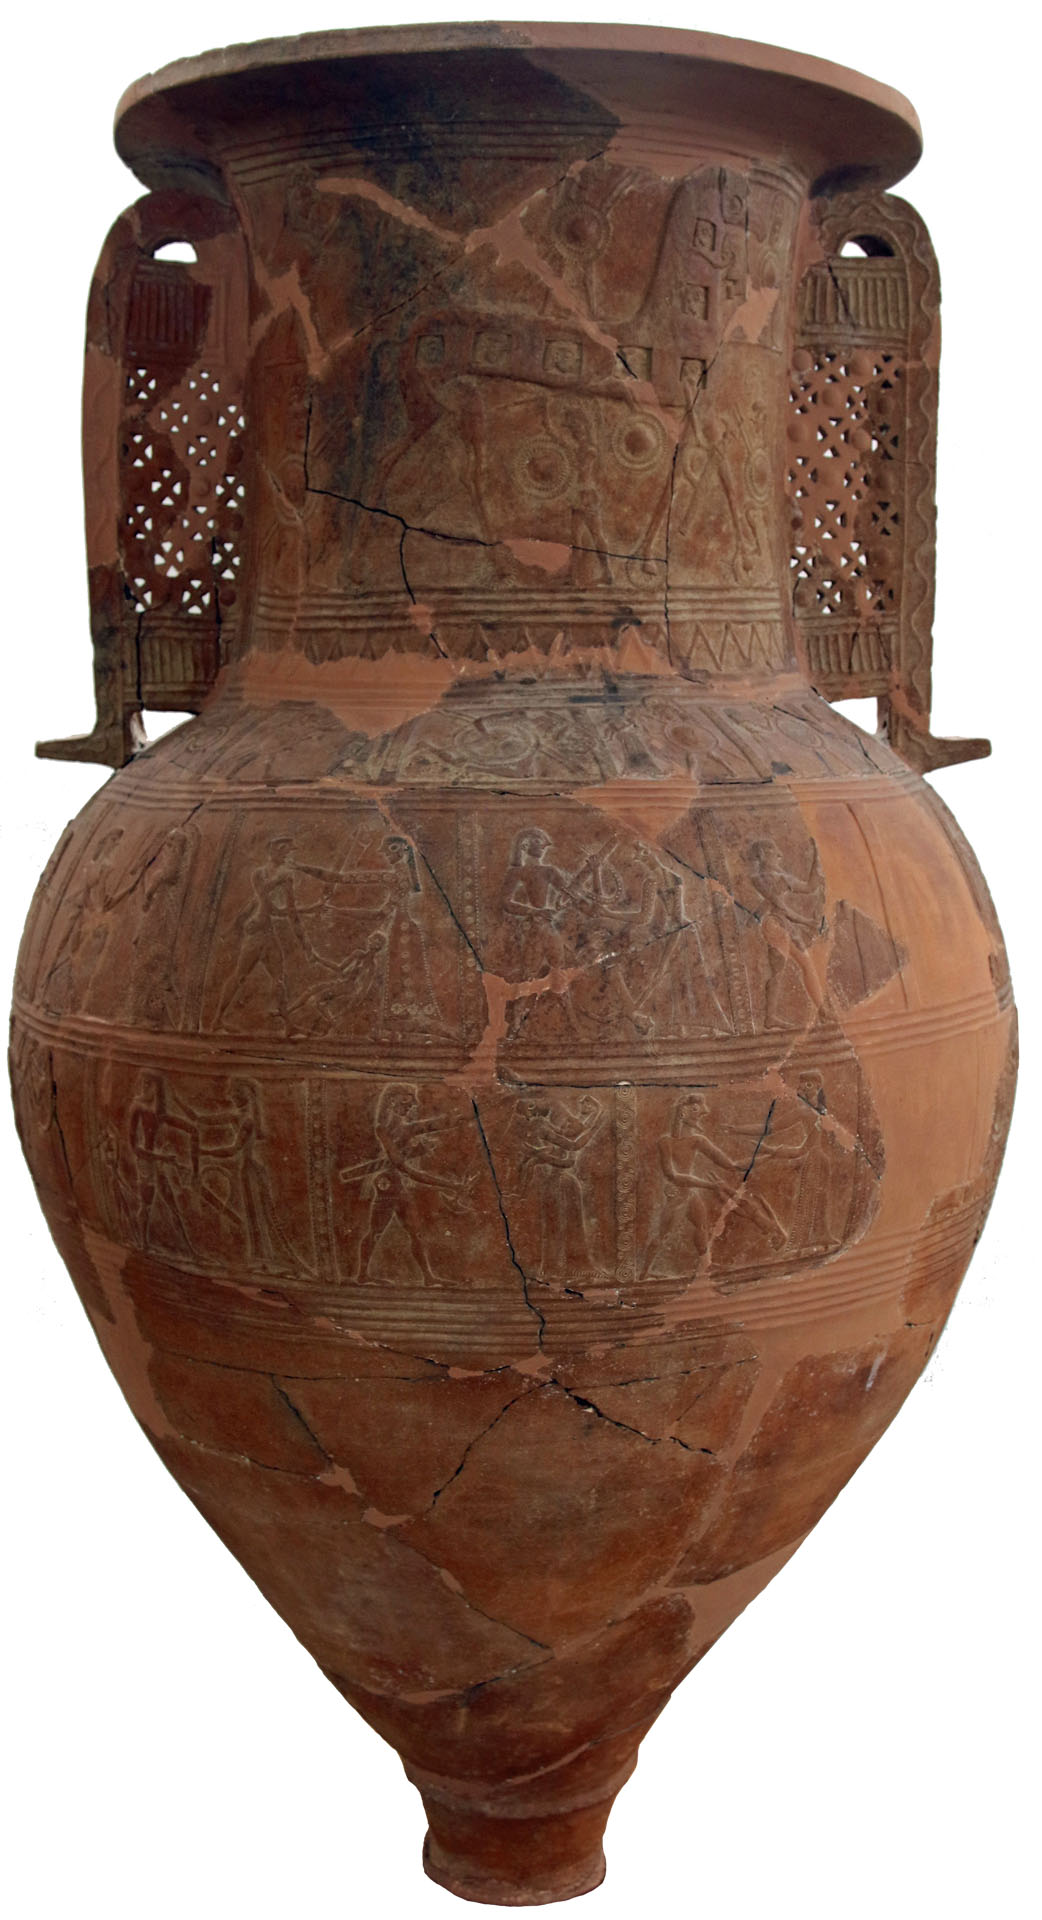 Pithos from Mykonos, Trojan horse, circa 675 BC